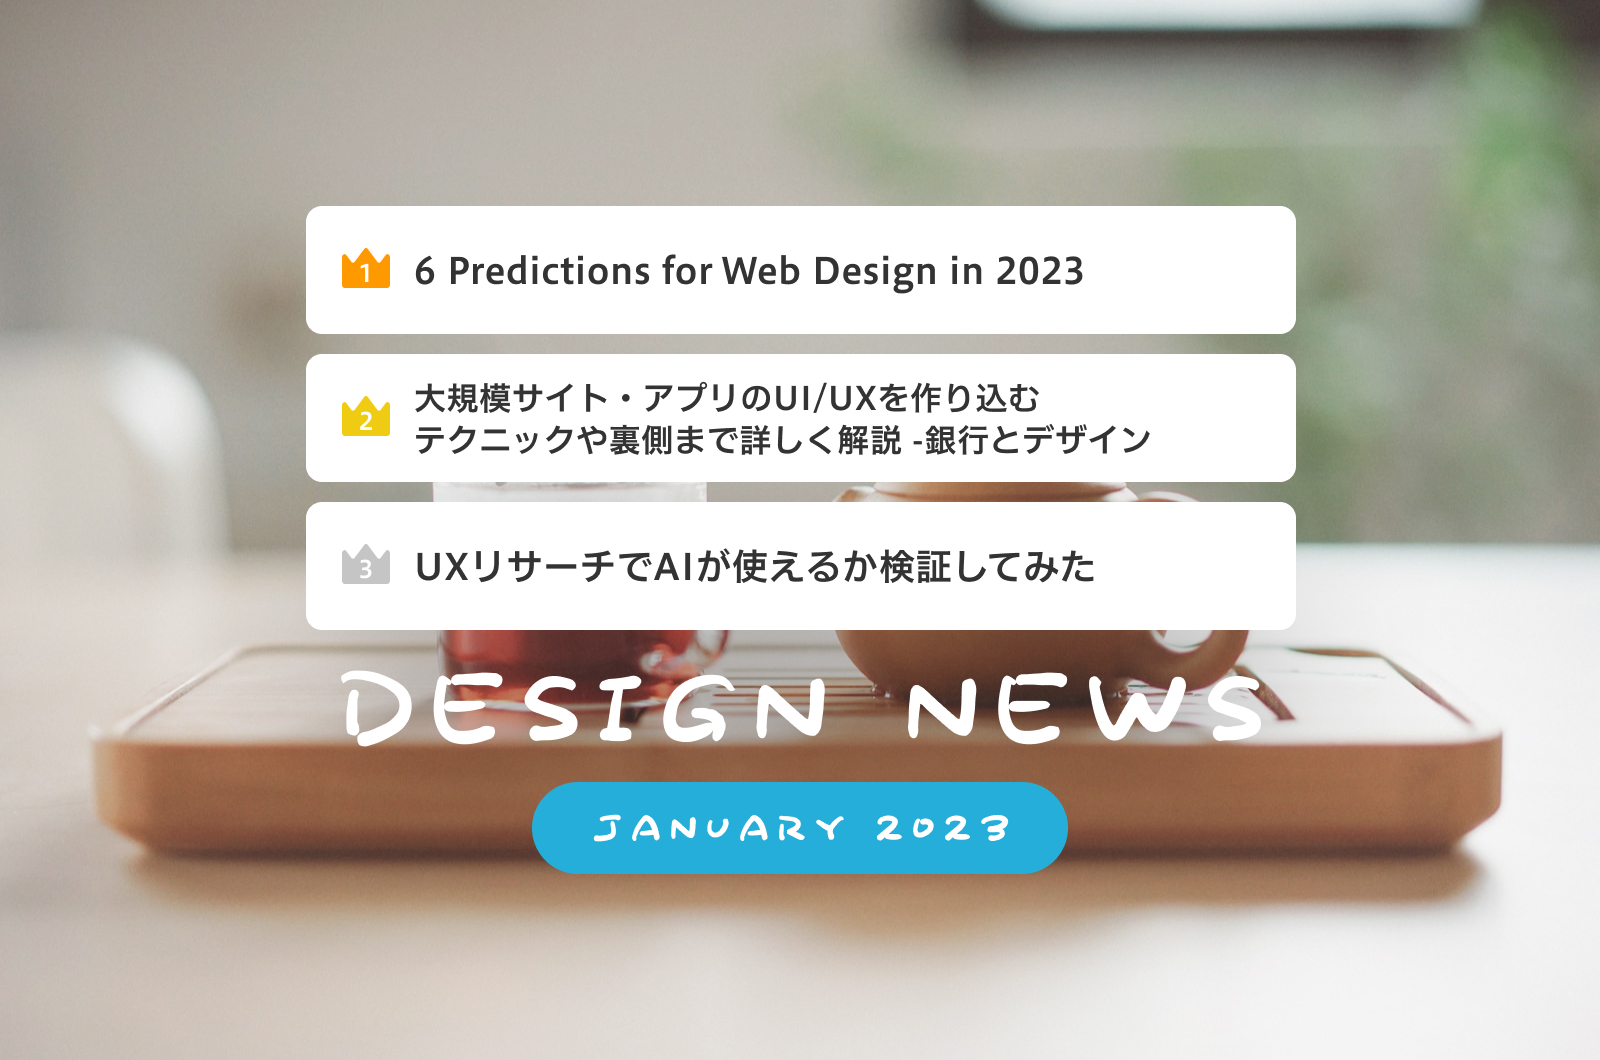 Design News (January 2023)